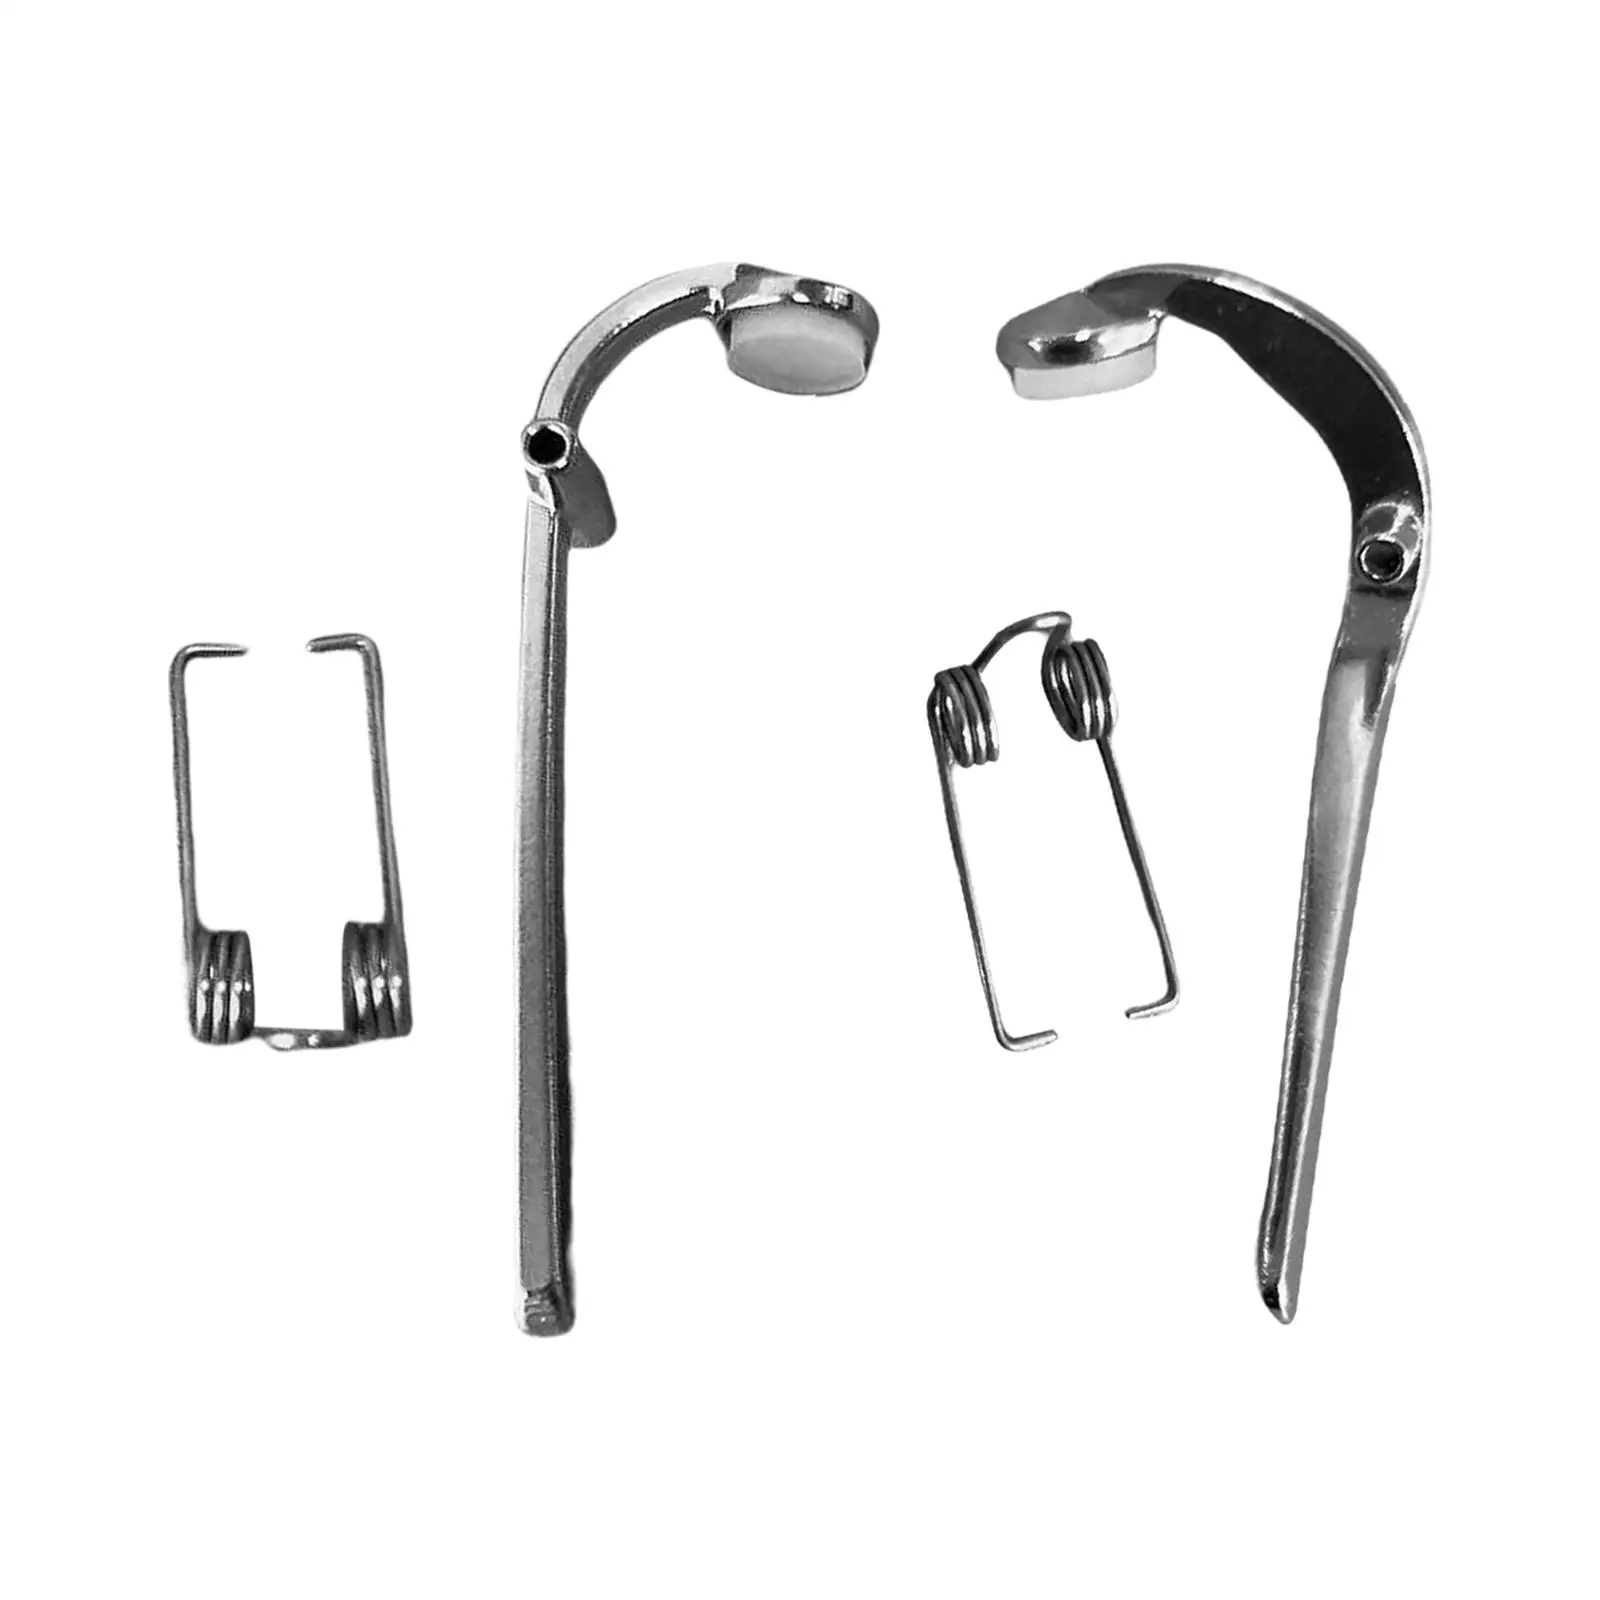 Trumpet Key Spit Valve Maintenance Kit Instrument Accessory Trumpet Valves Springs for Trombone